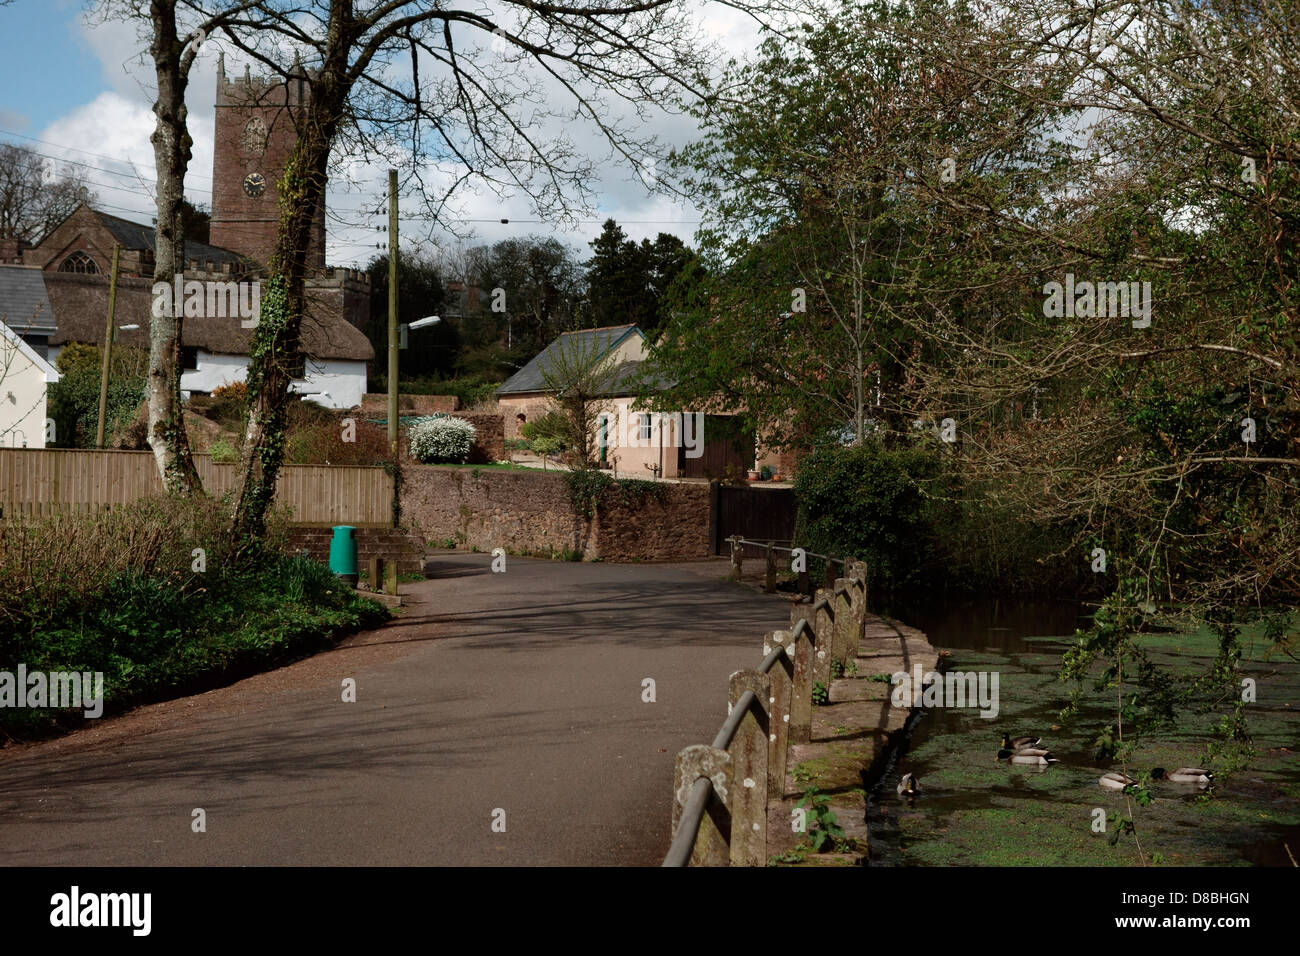 Village of Halberton near Tiverton, Devon UK Stock Photo